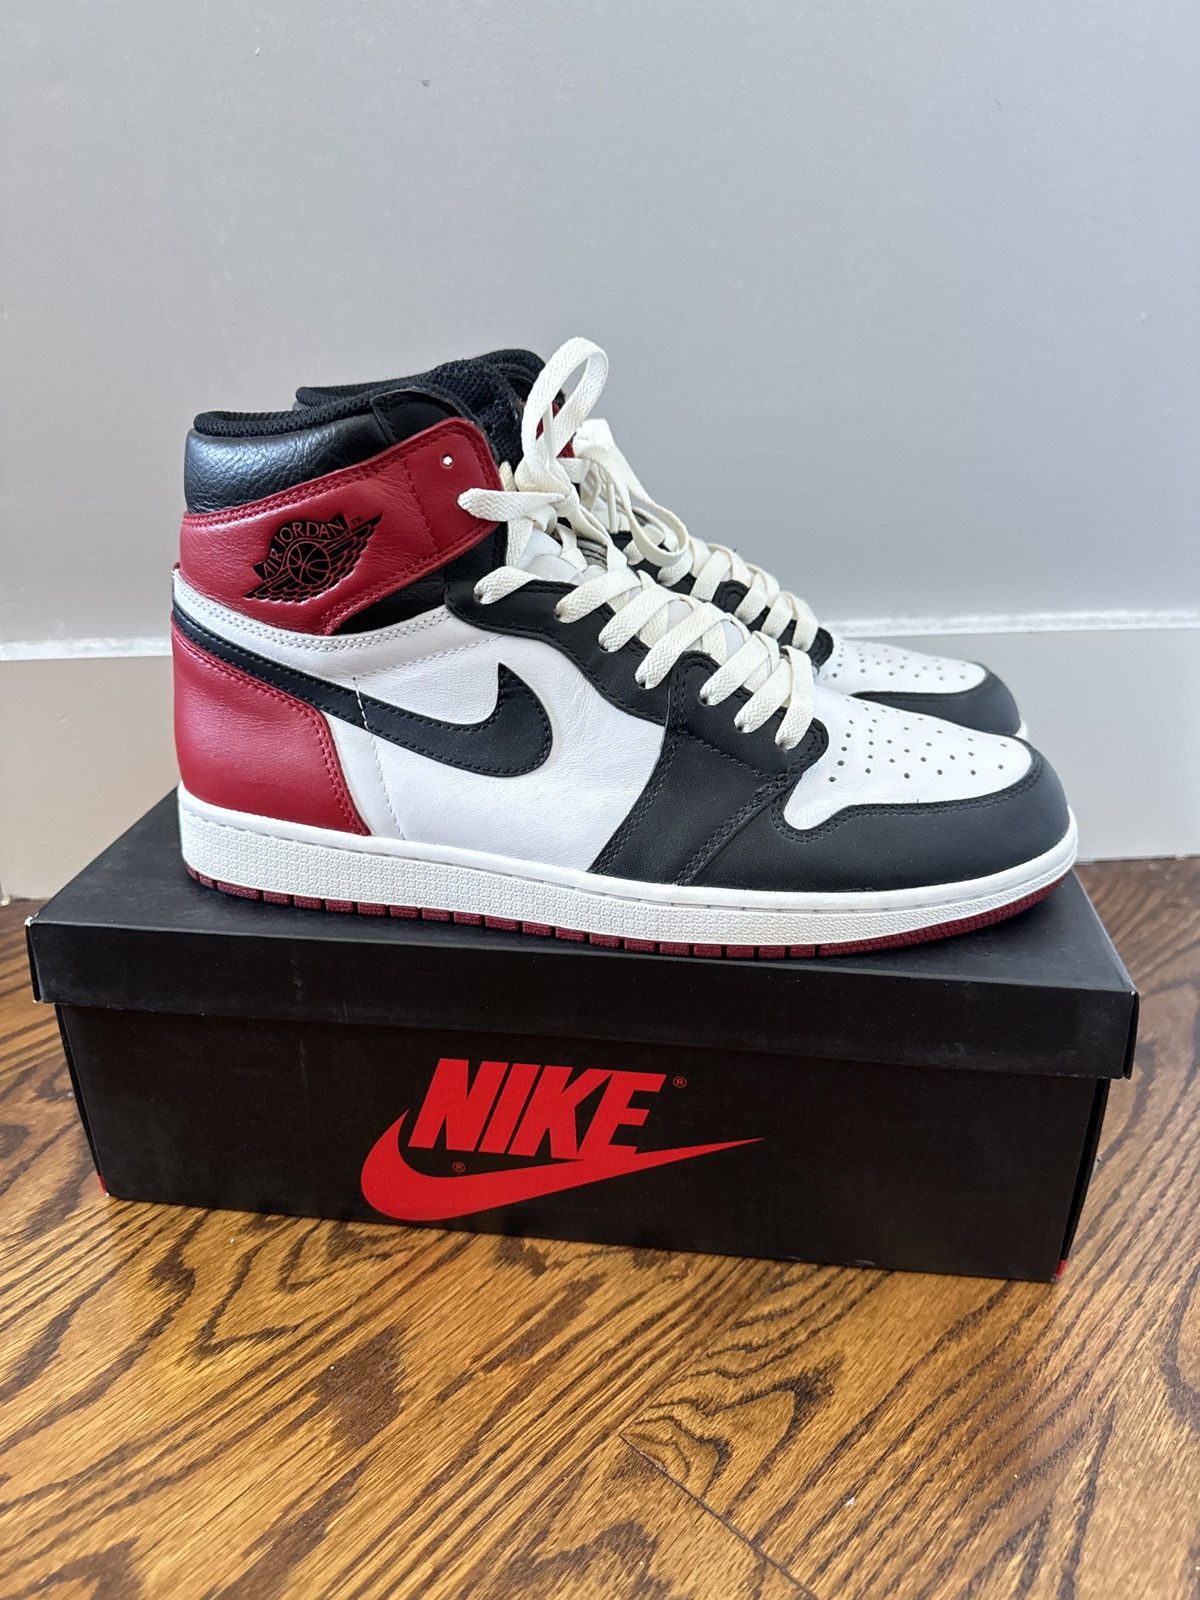 Pre-owned Jordan Nike Jordan 1 Black Toe Sz.11.5 Shoes In Red